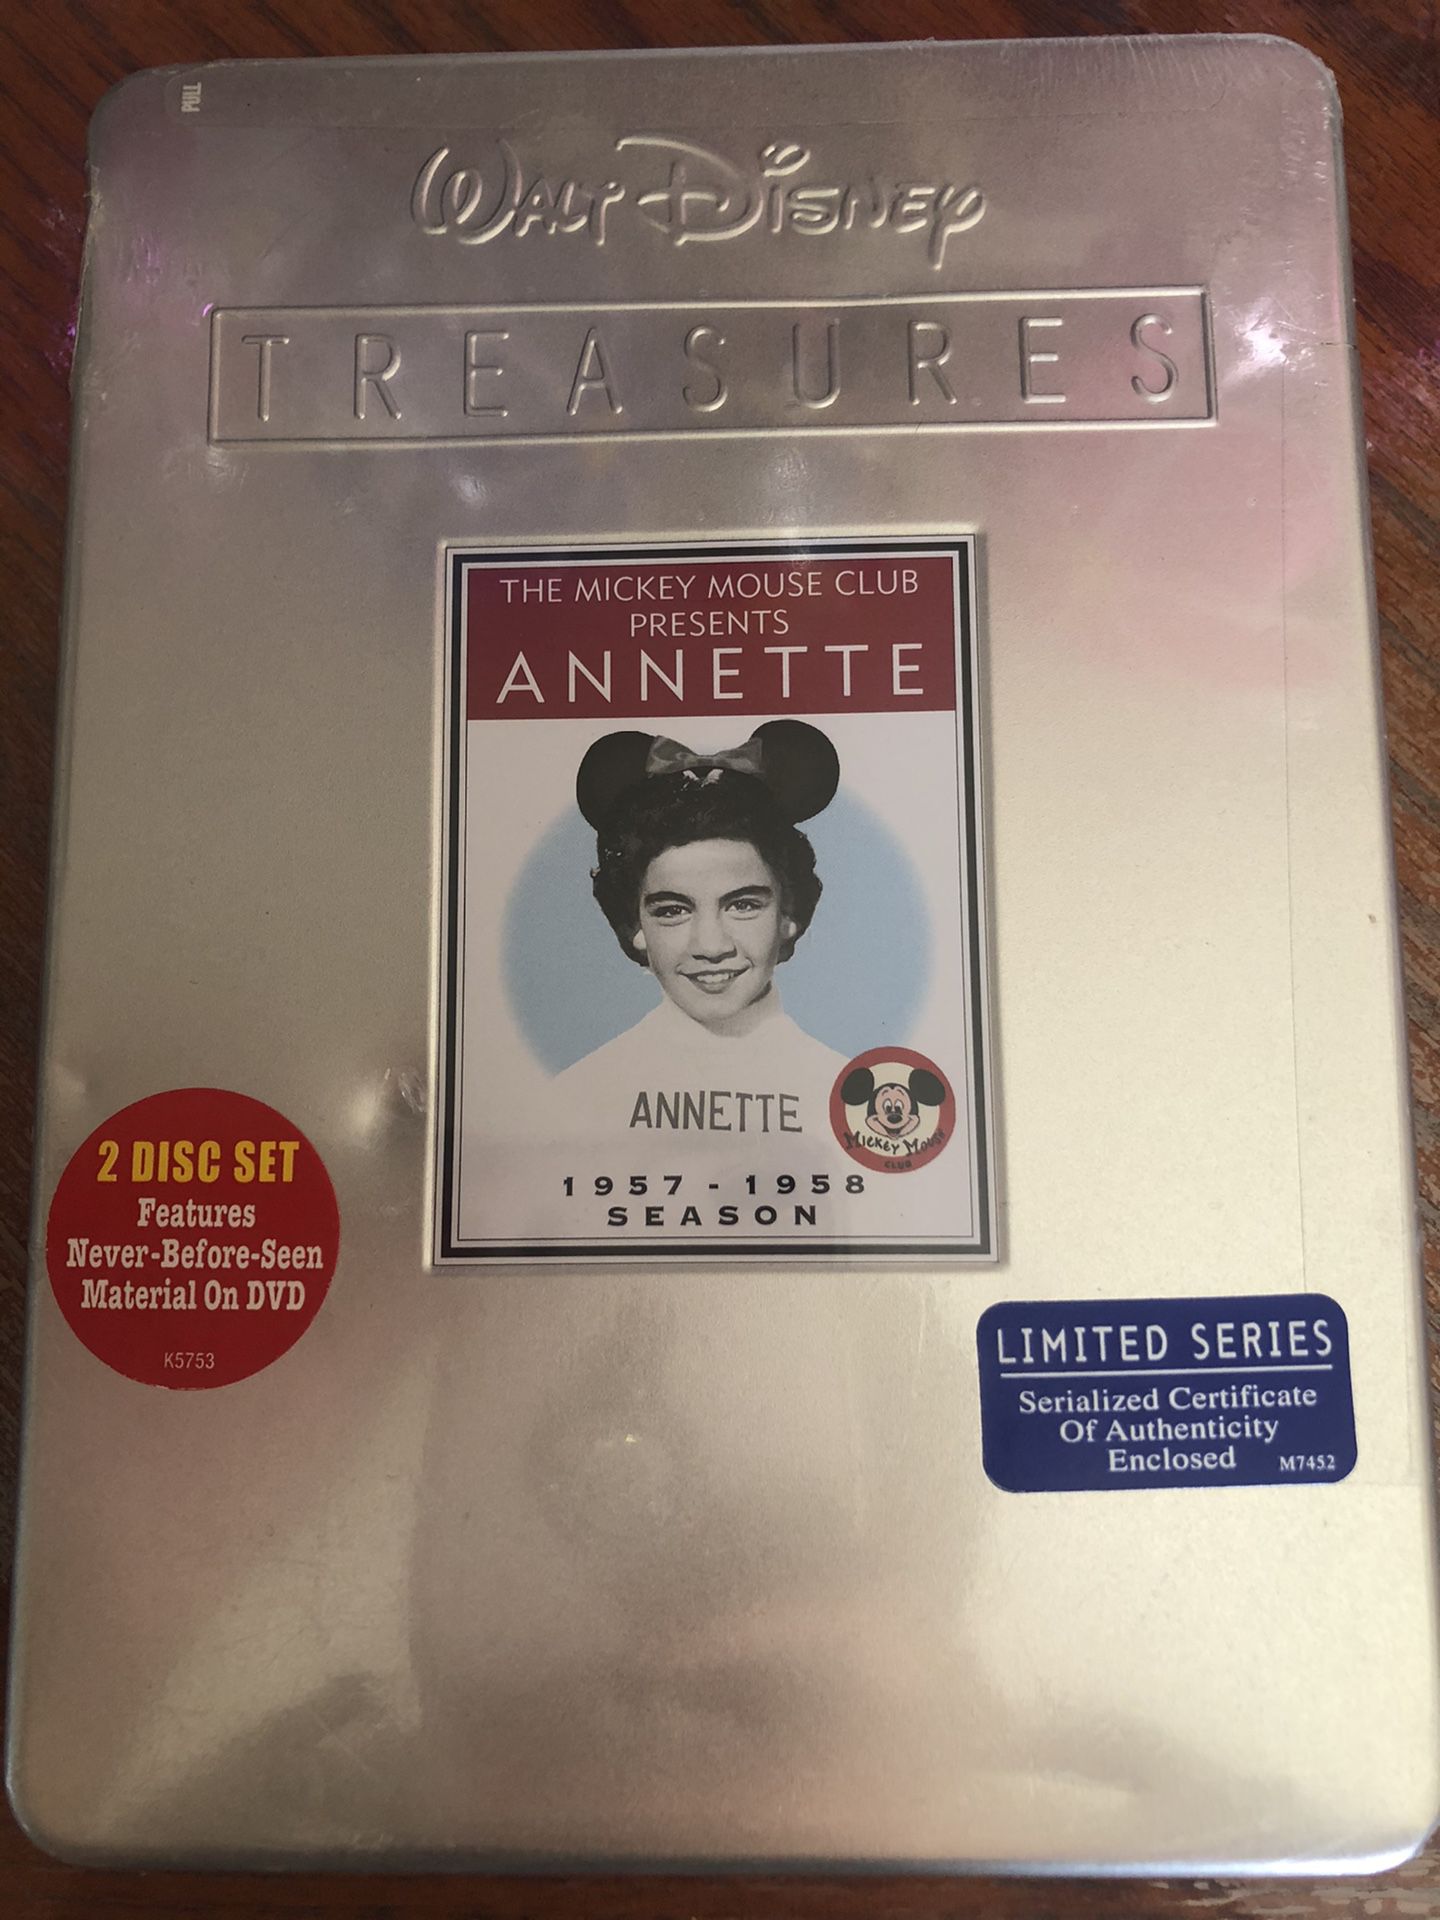 Walt Disney limited series of Annette!!